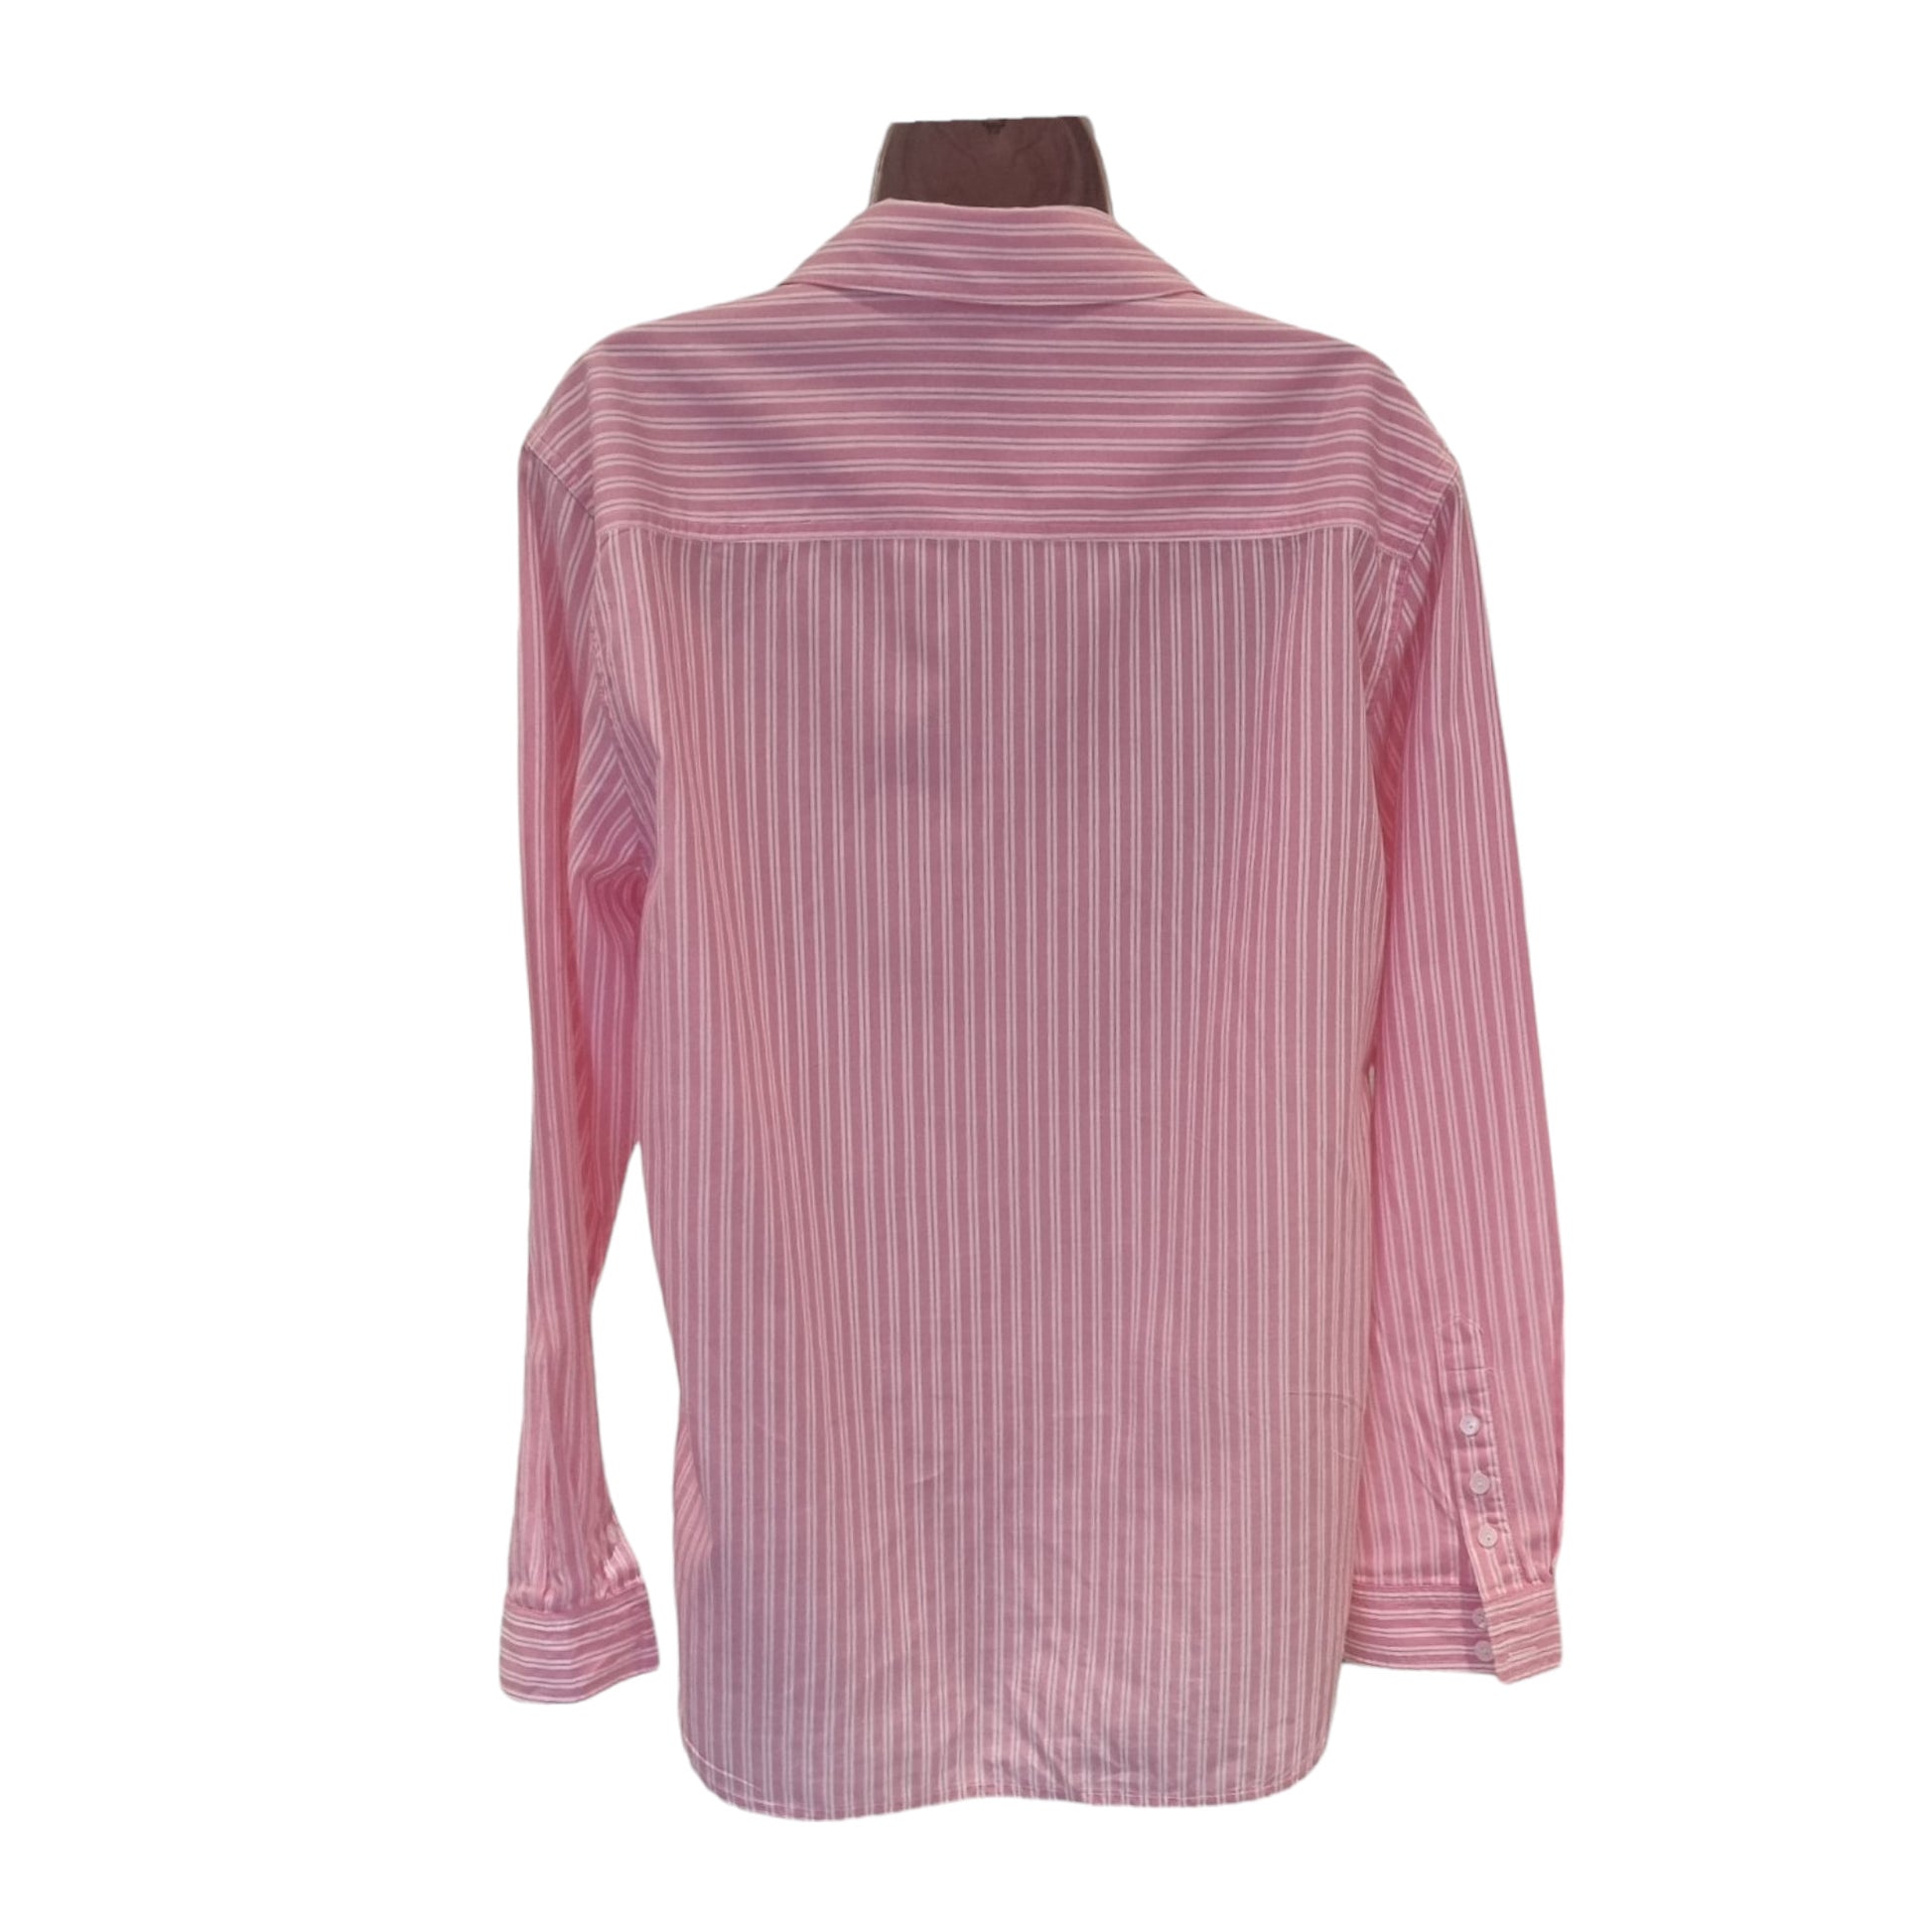 Caroline Charles Pink & White Candy Stripe Shirt UK 16 US 12 EU 44 IT 48 Timeless Fashions